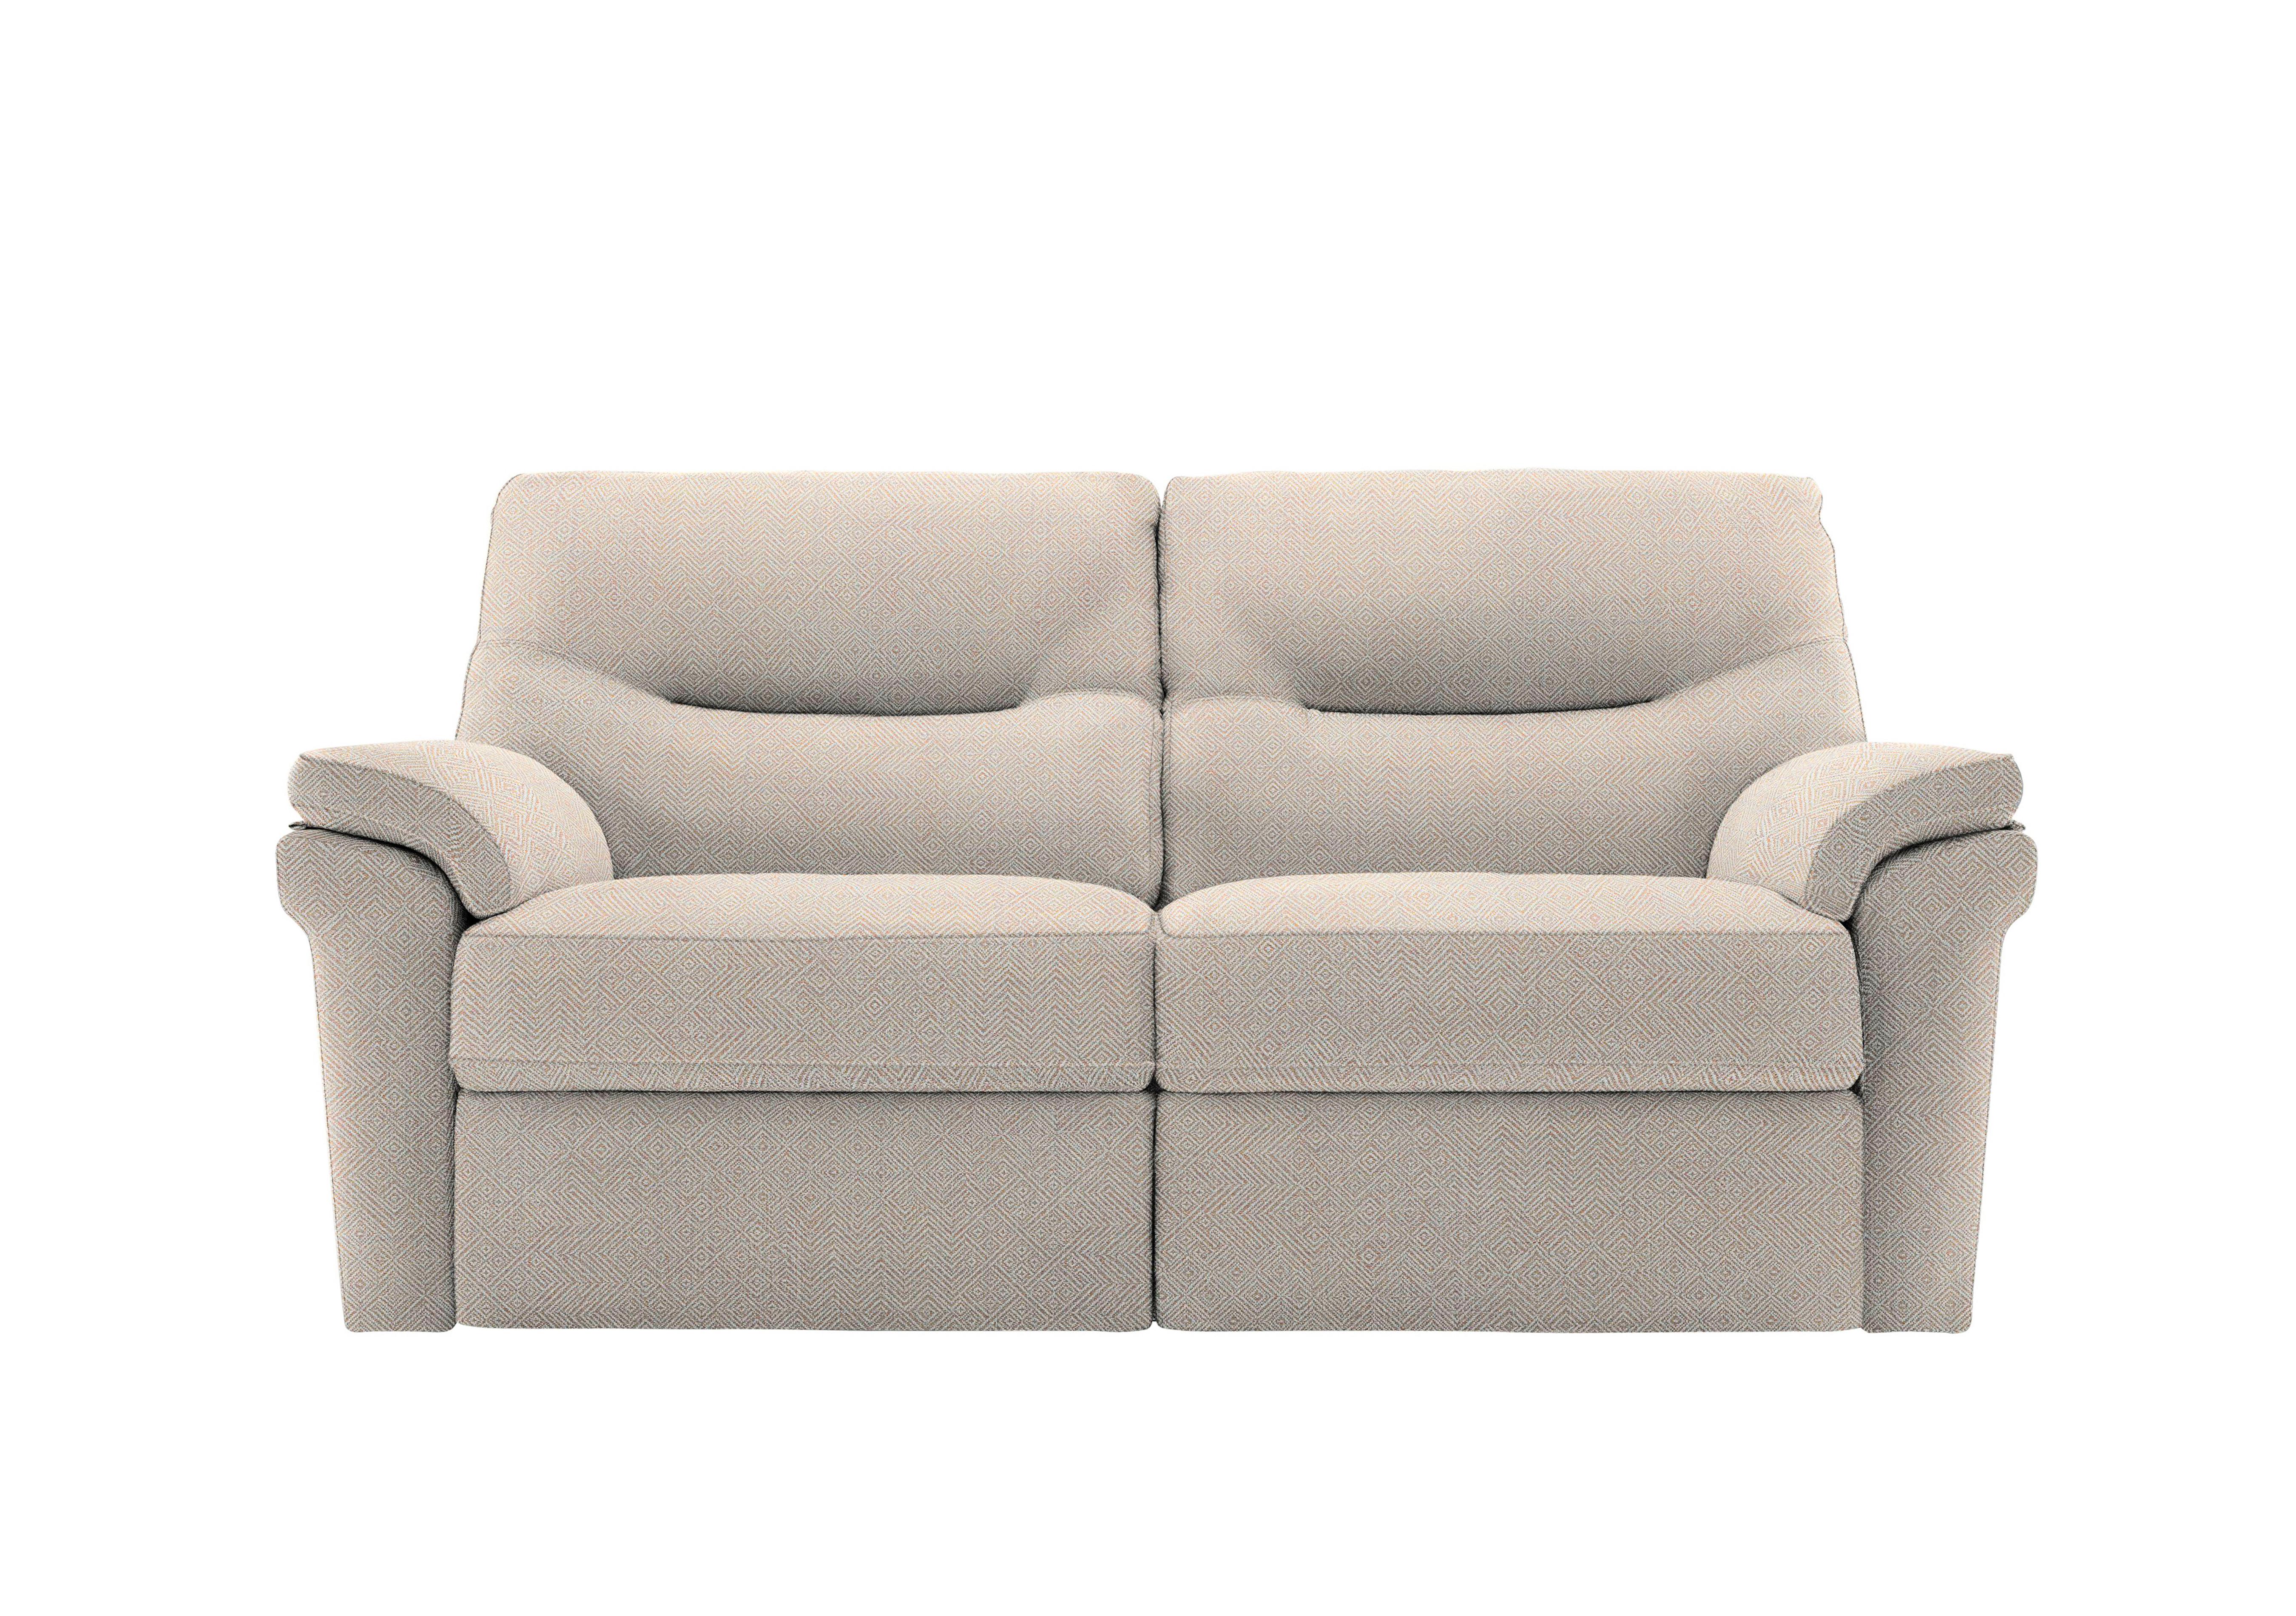 Seattle 2.5 Seater Fabric Power Recliner Sofa with Power Lumbar in B011 Nebular Blush on Furniture Village